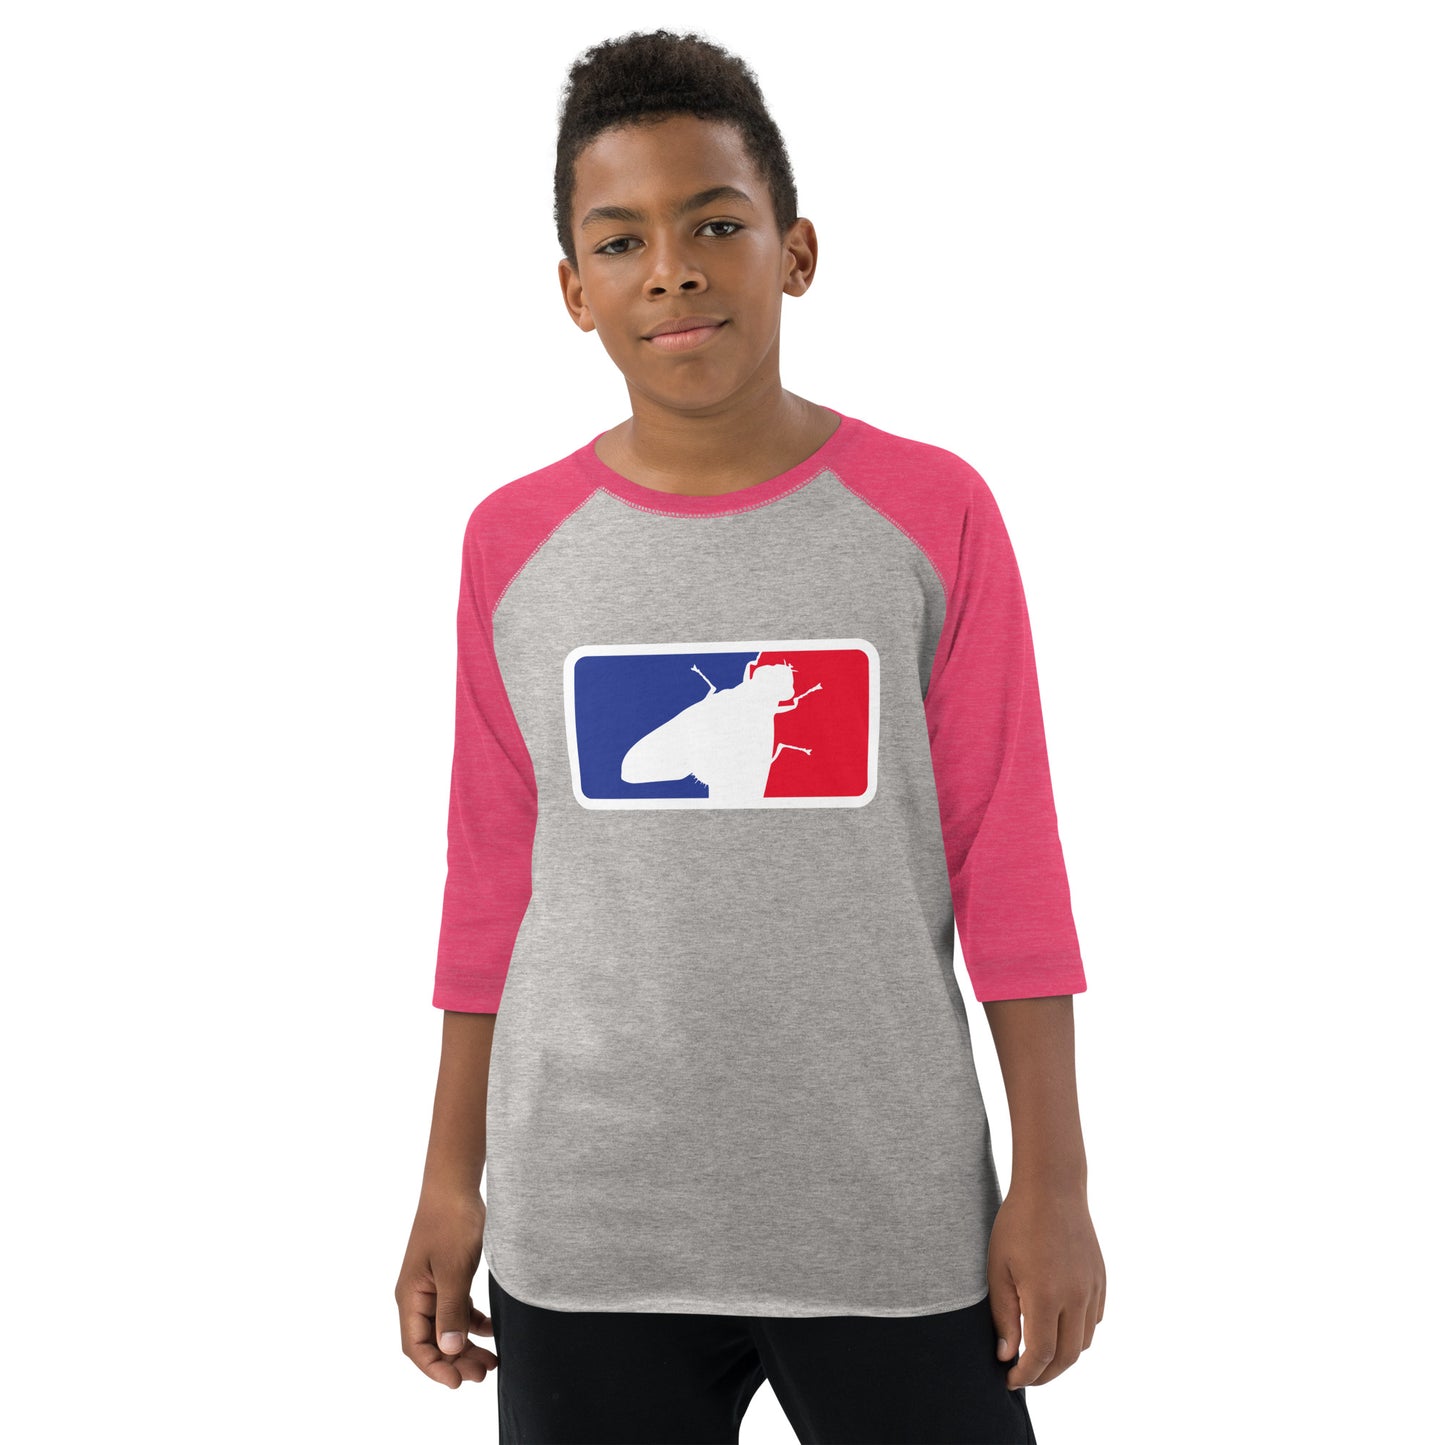 Major Pop Fly Youth little league shirt